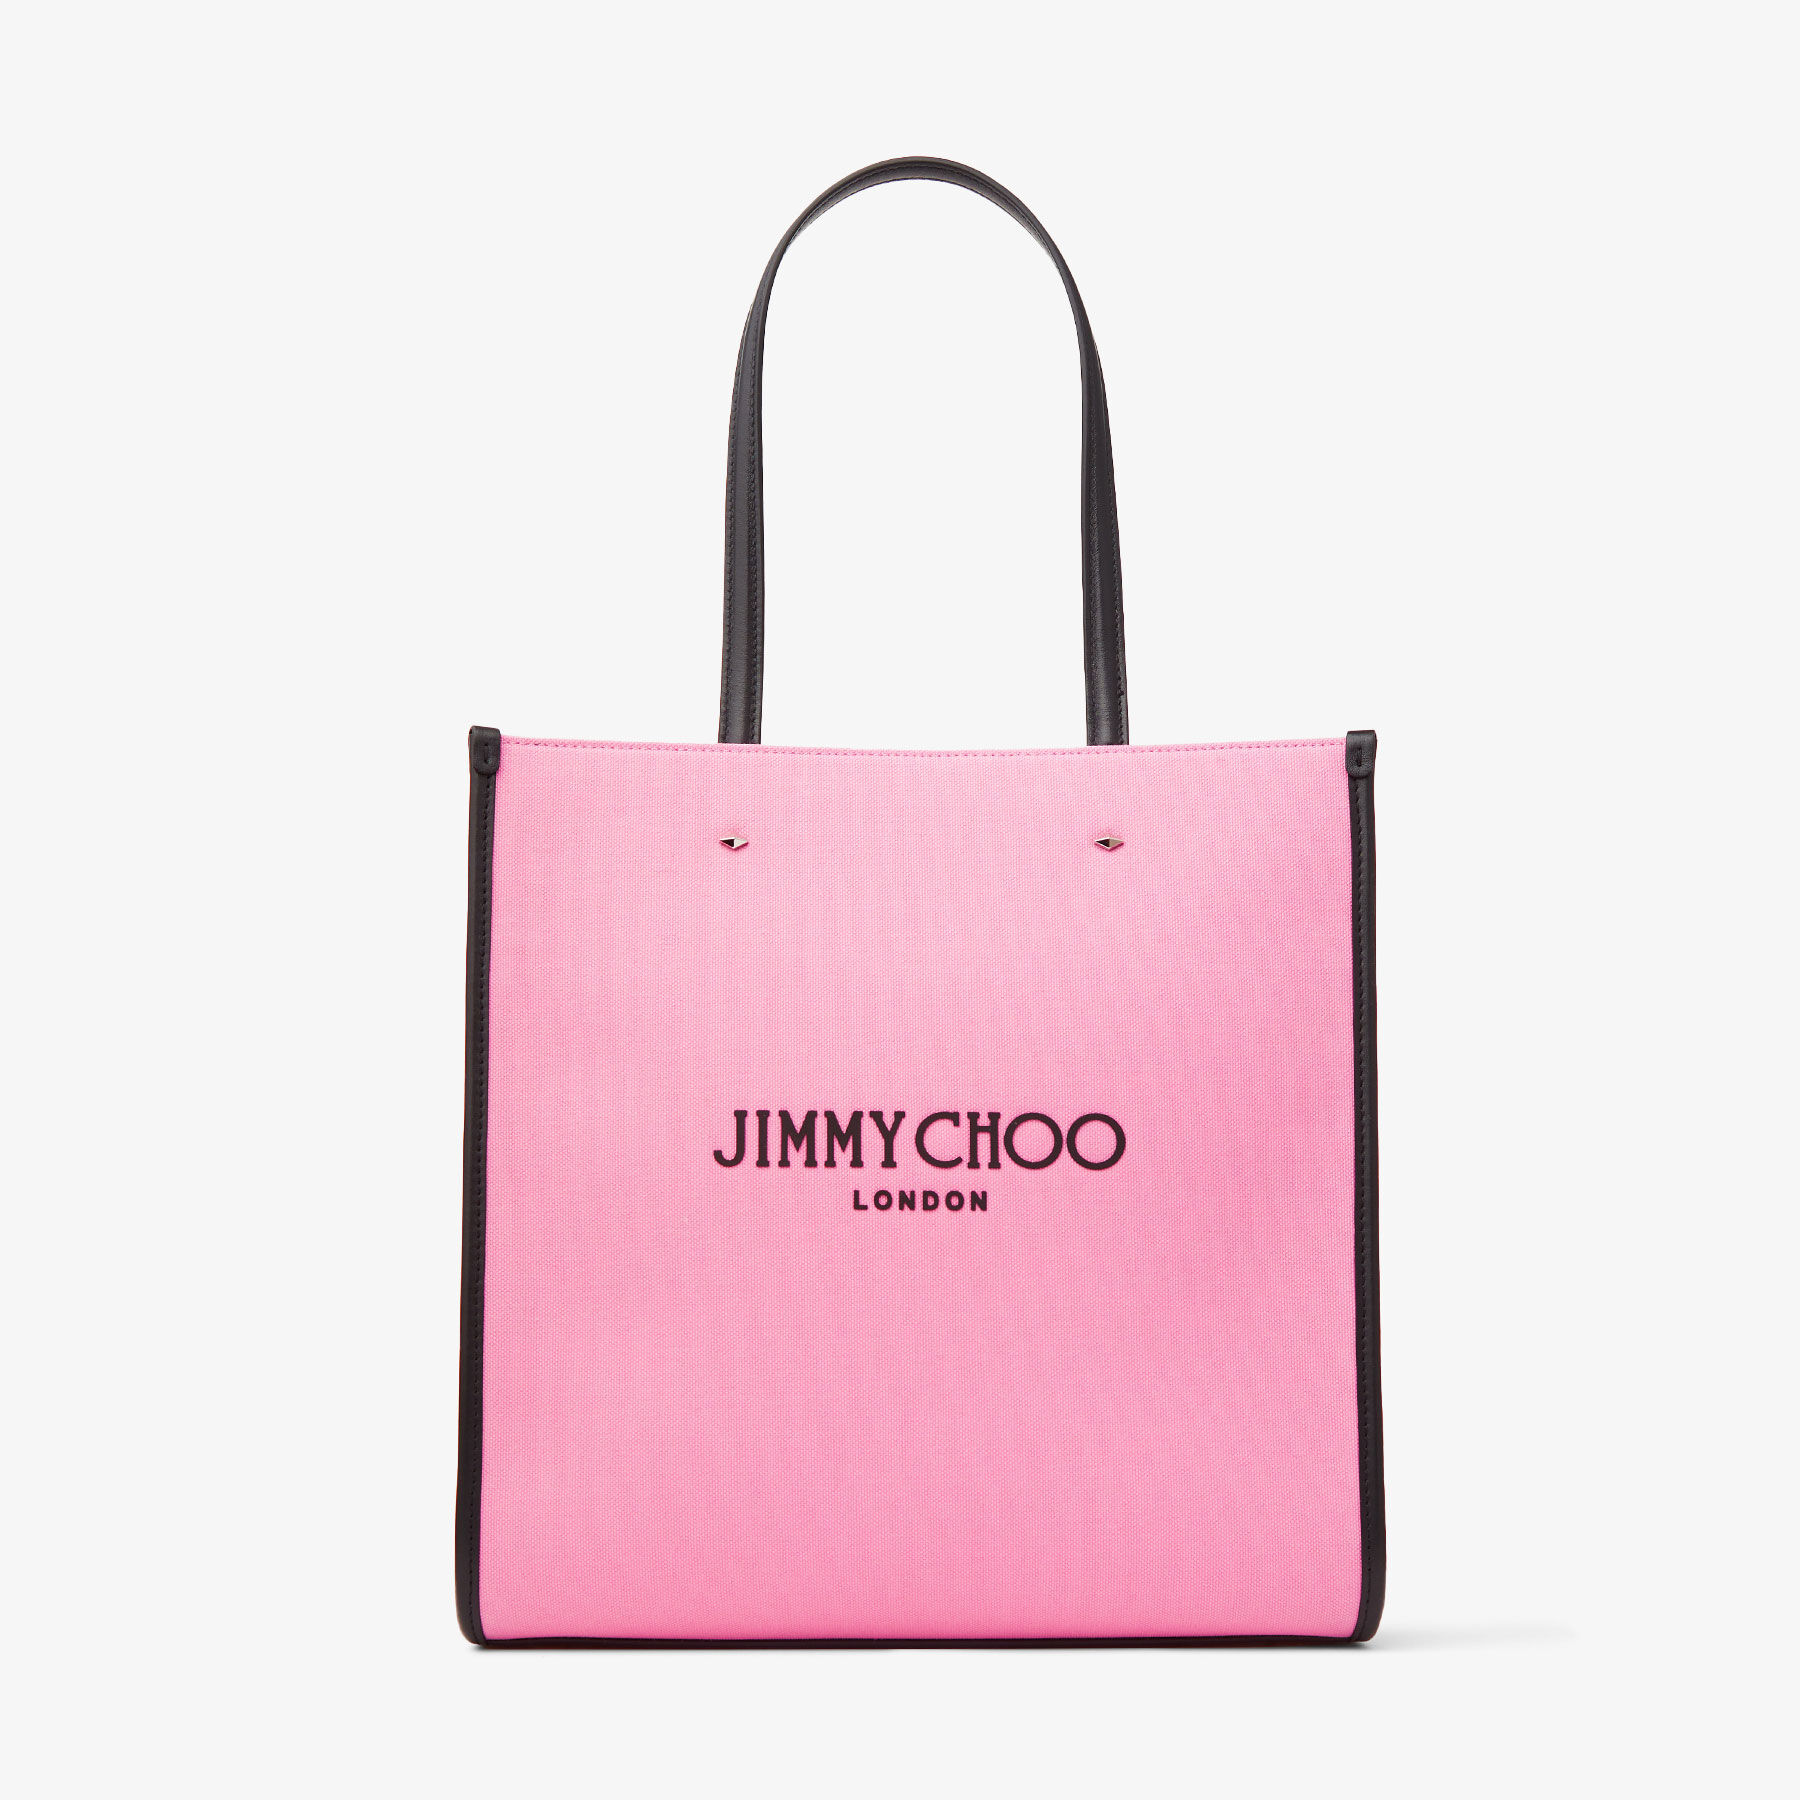 【JIMMY CHOO】PIMLICO N/S ネオプレン ブラックトートバッグ